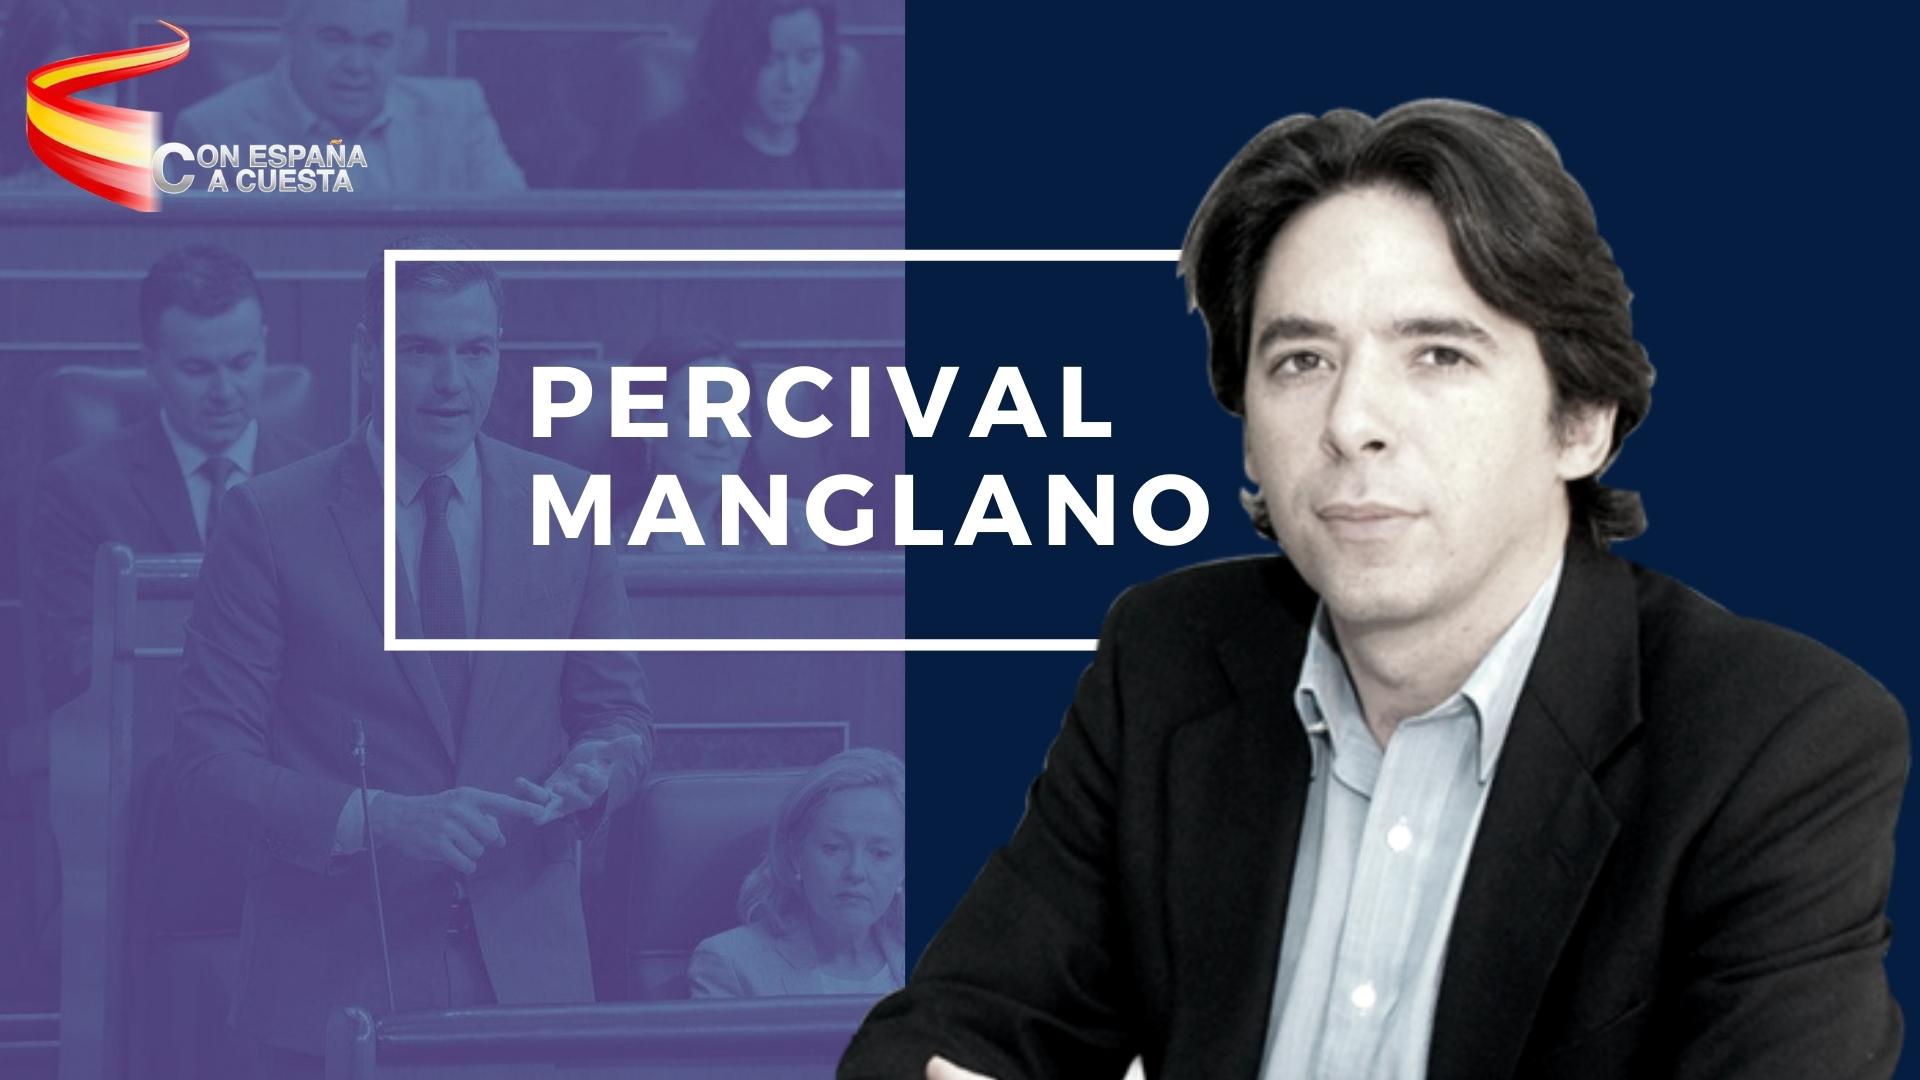 PERCIVAL MANGLANO